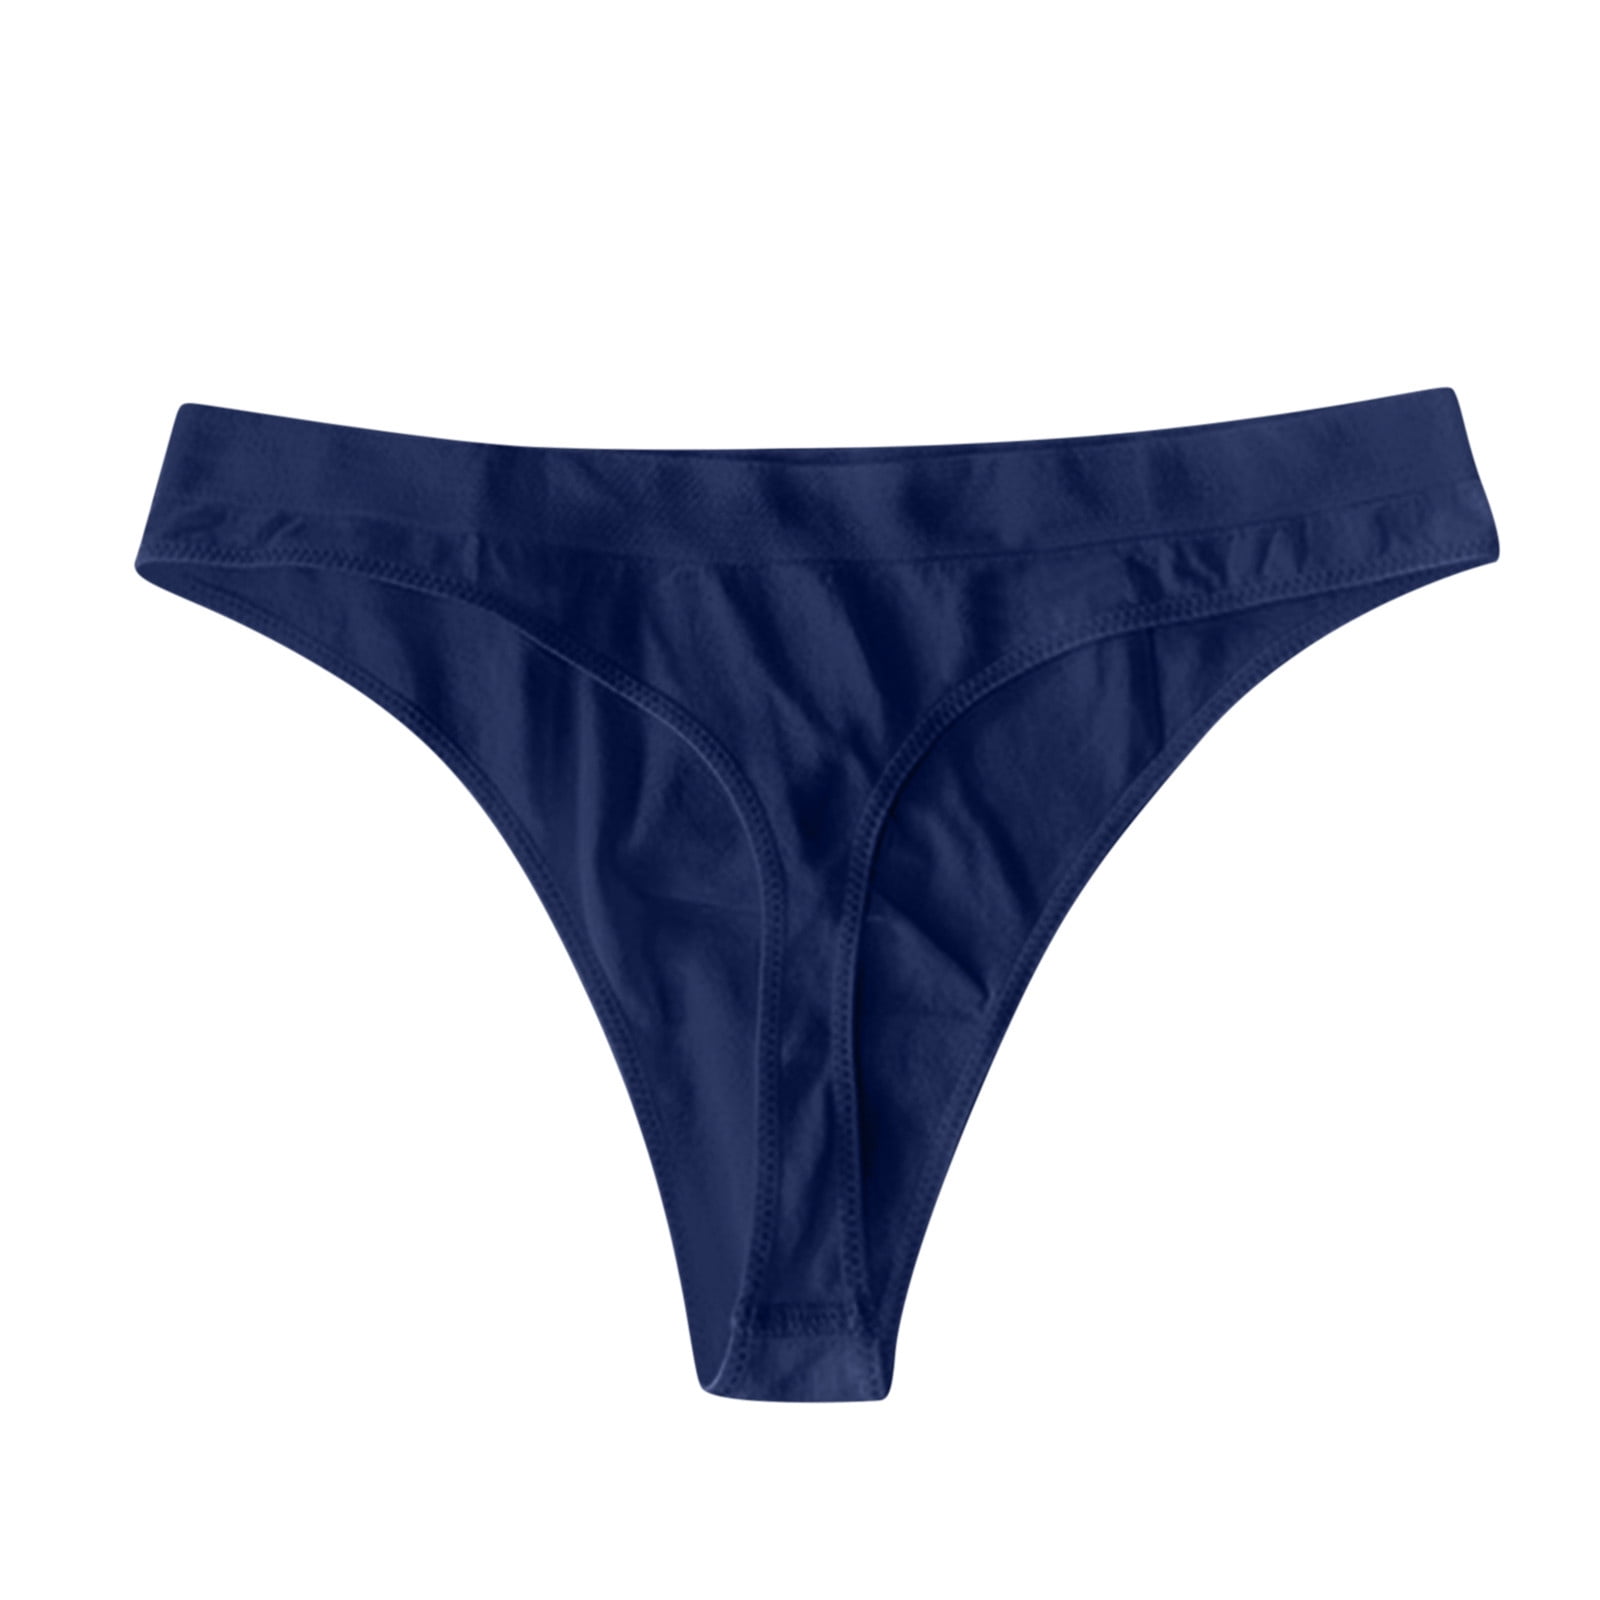 Zuwimk Panties For Women Thong,Womens Underwear Invisible Seamless